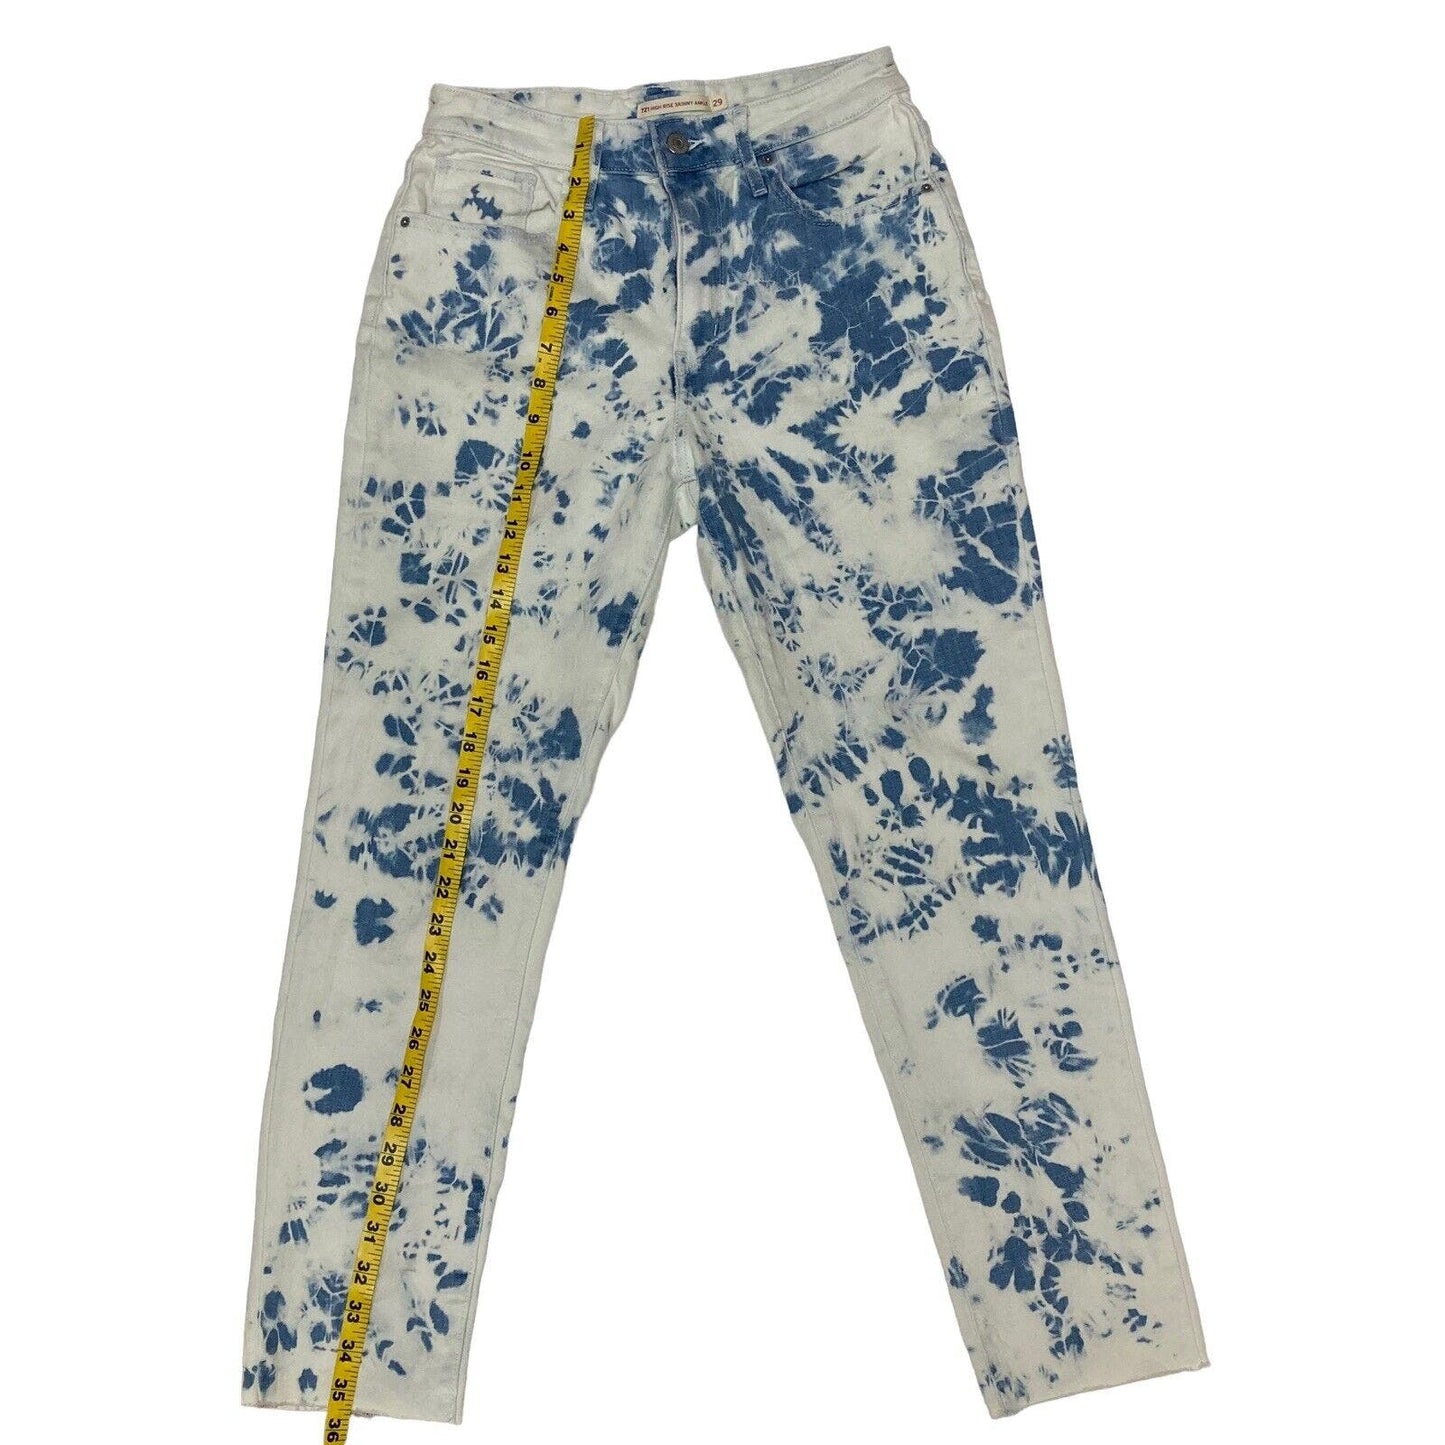 Levi’s 721 High Rise Skinny Blue Tie Dye Raw Hem Jeans Size 29